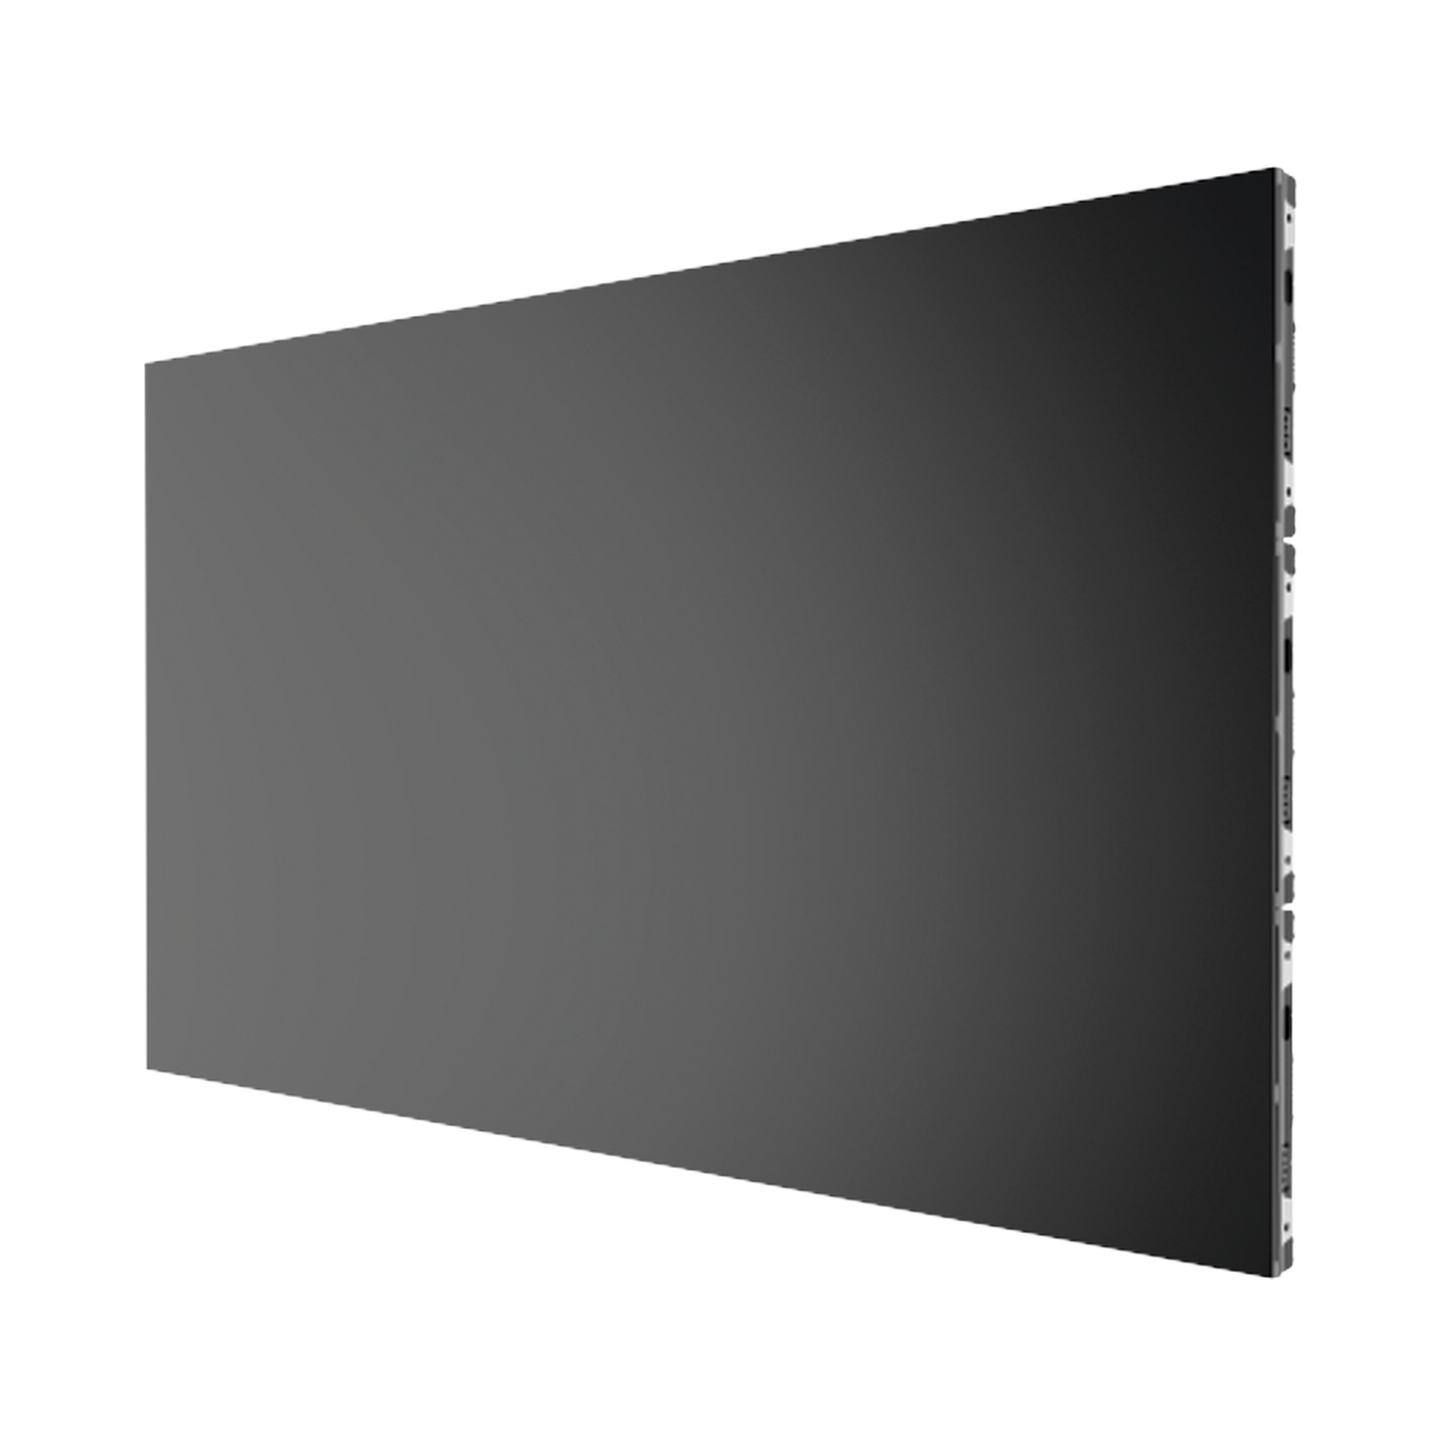 Kit Videowall LED 3.5MP / Incluye 16 Paneles LED COB Pixel Pitch 0.9mm / Controlador / Herramienta de Mantenimiento